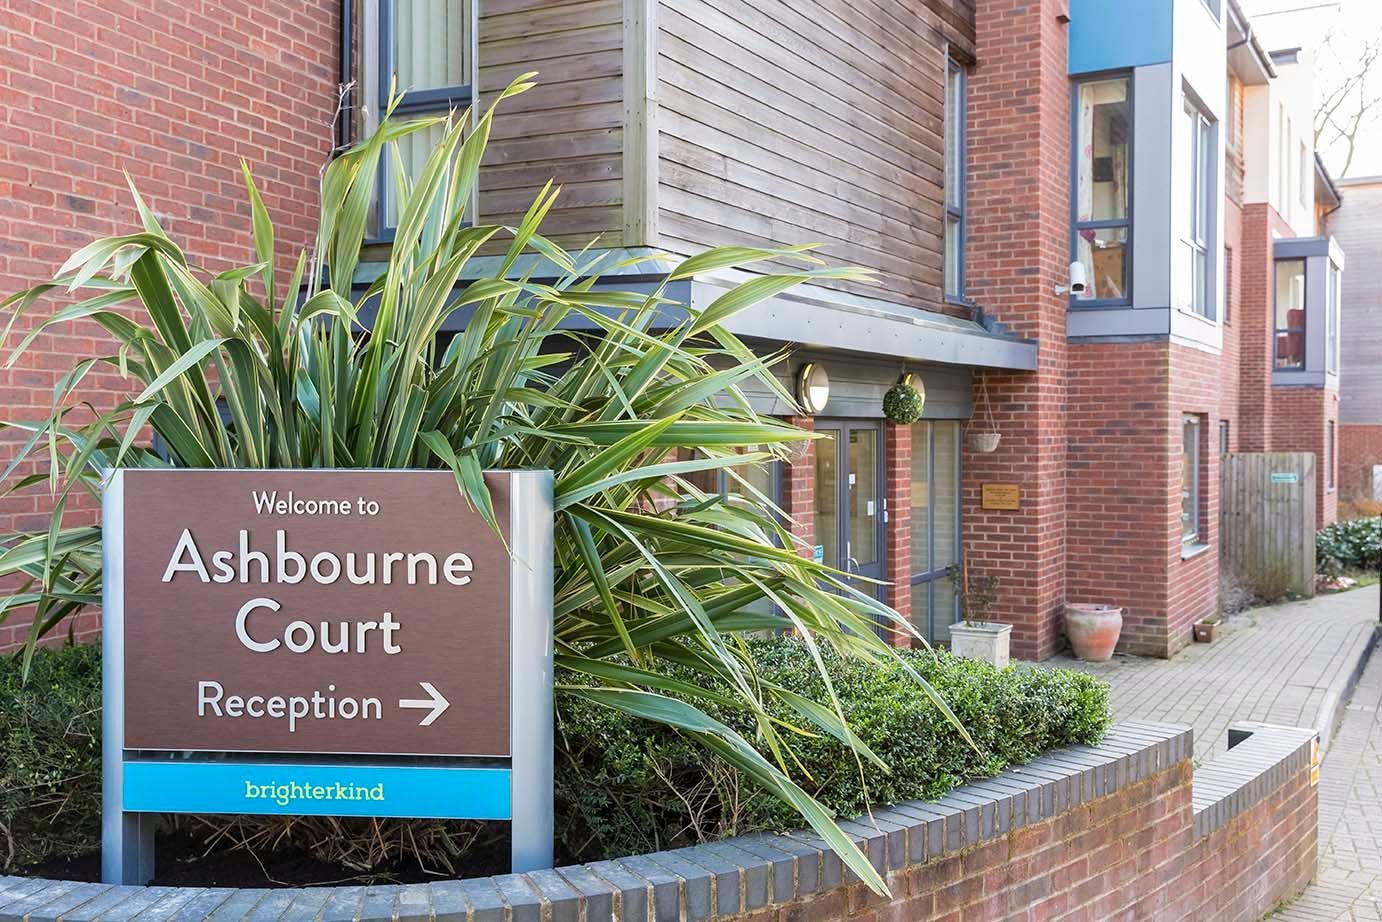 Ashbourne Court care home